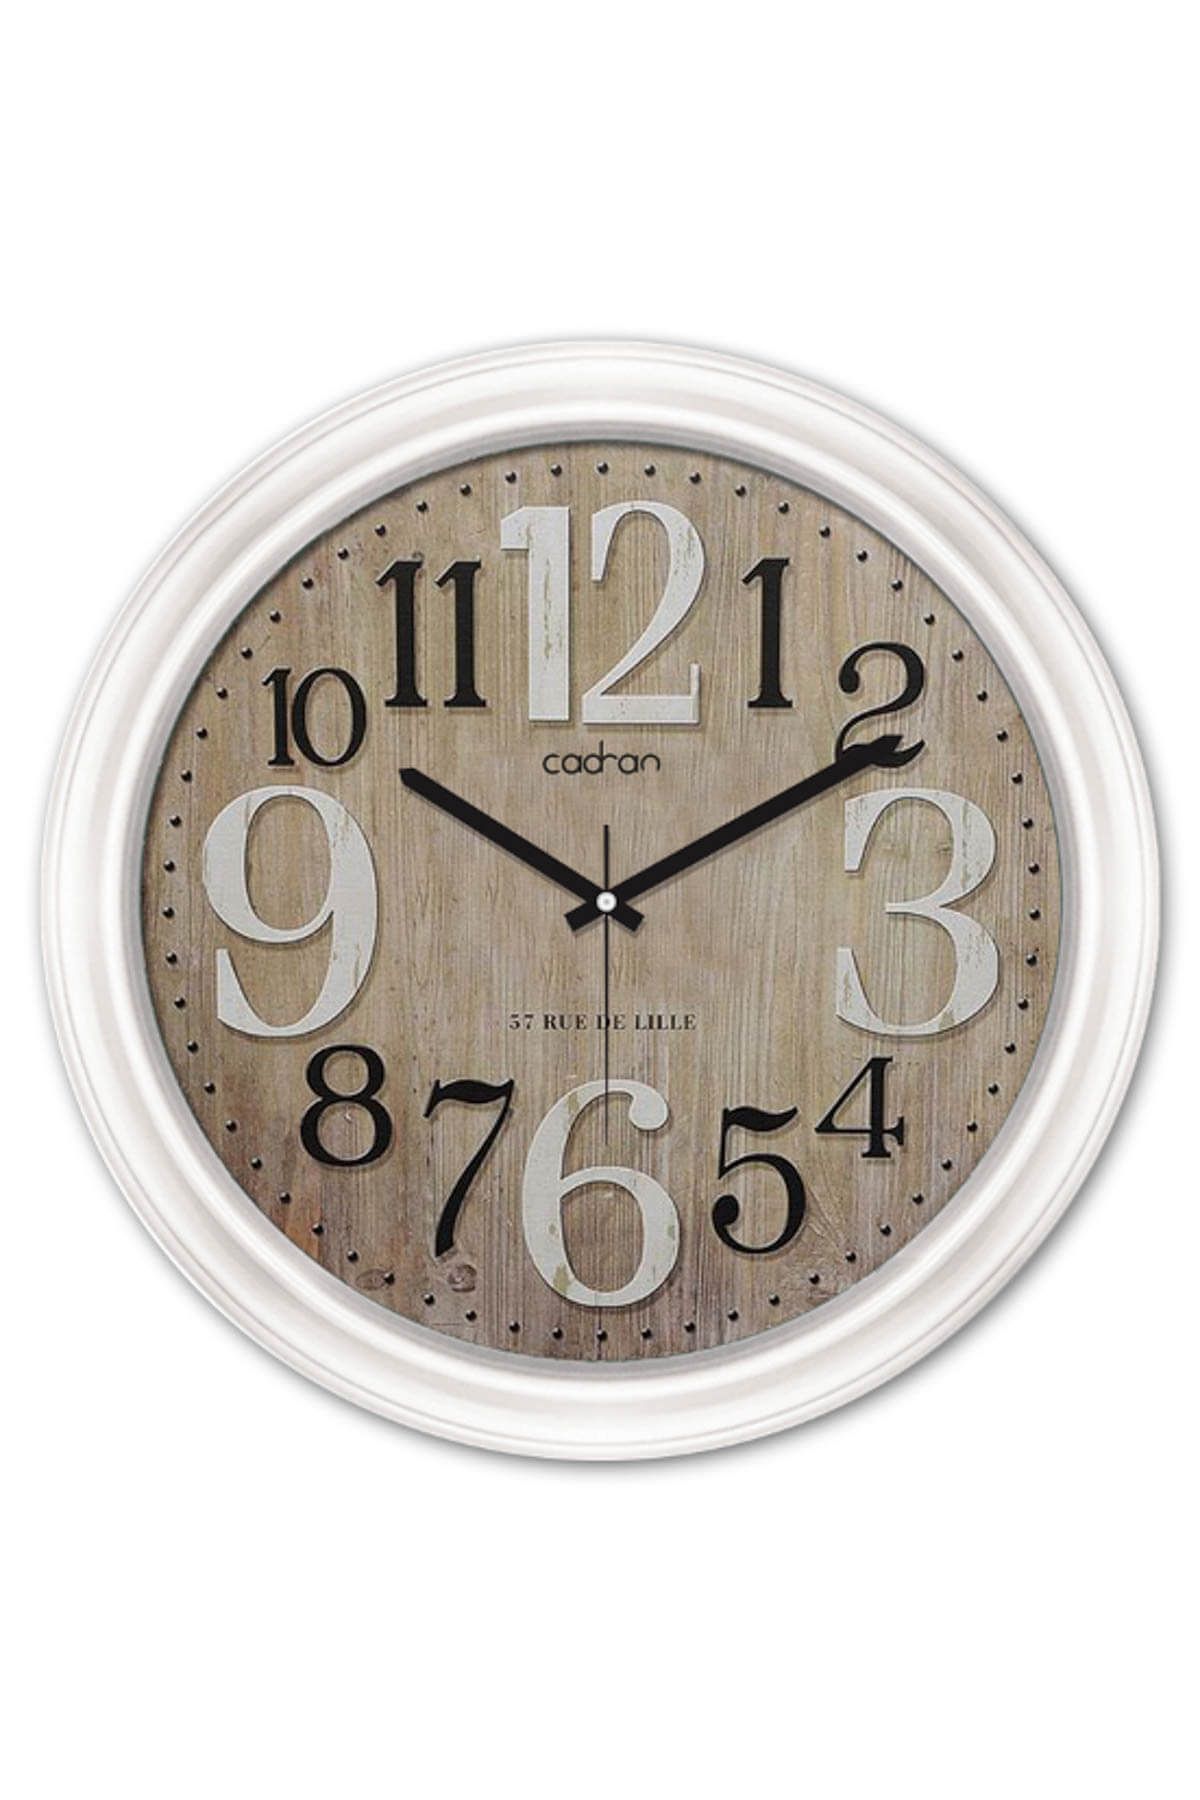 Cadran Fashion Clock Dekoratif Camlı Duvar Saati CDR069